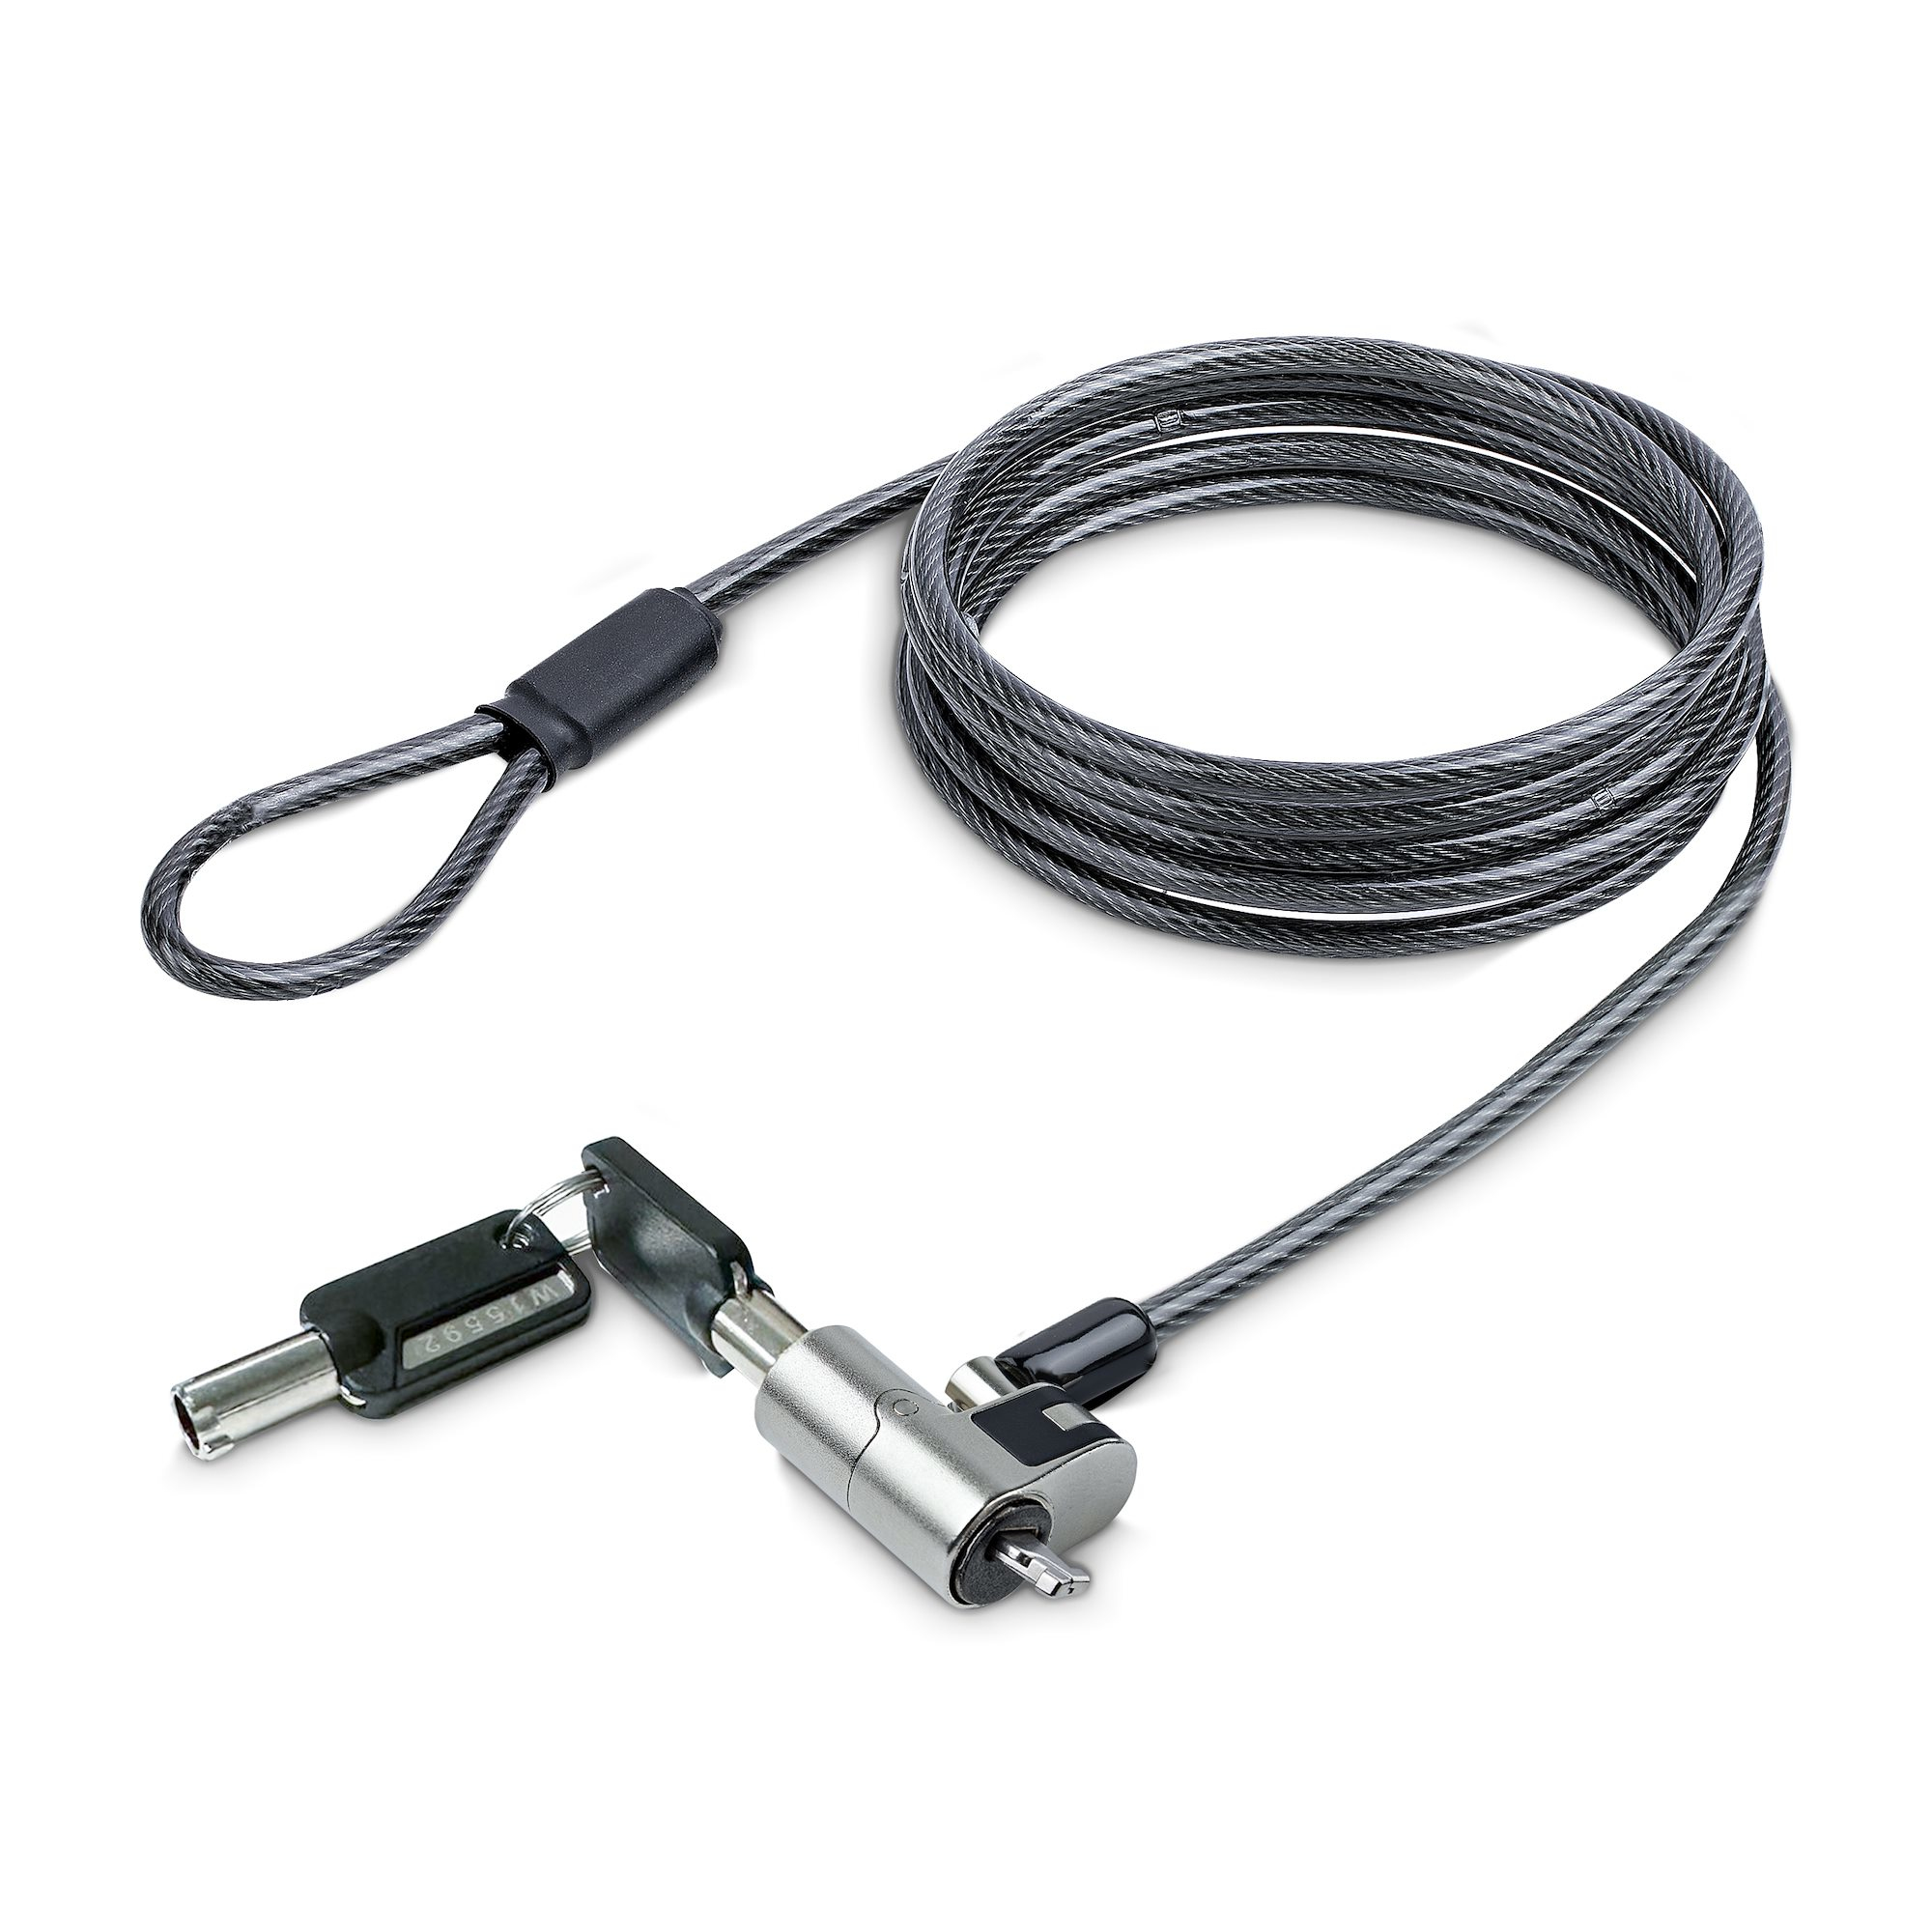 Photos - Cable (video, audio, USB) Startech.com Nano Laptop Cable Lock, 6ft (2m), Anti-Theft Keyed Lock, NANO 